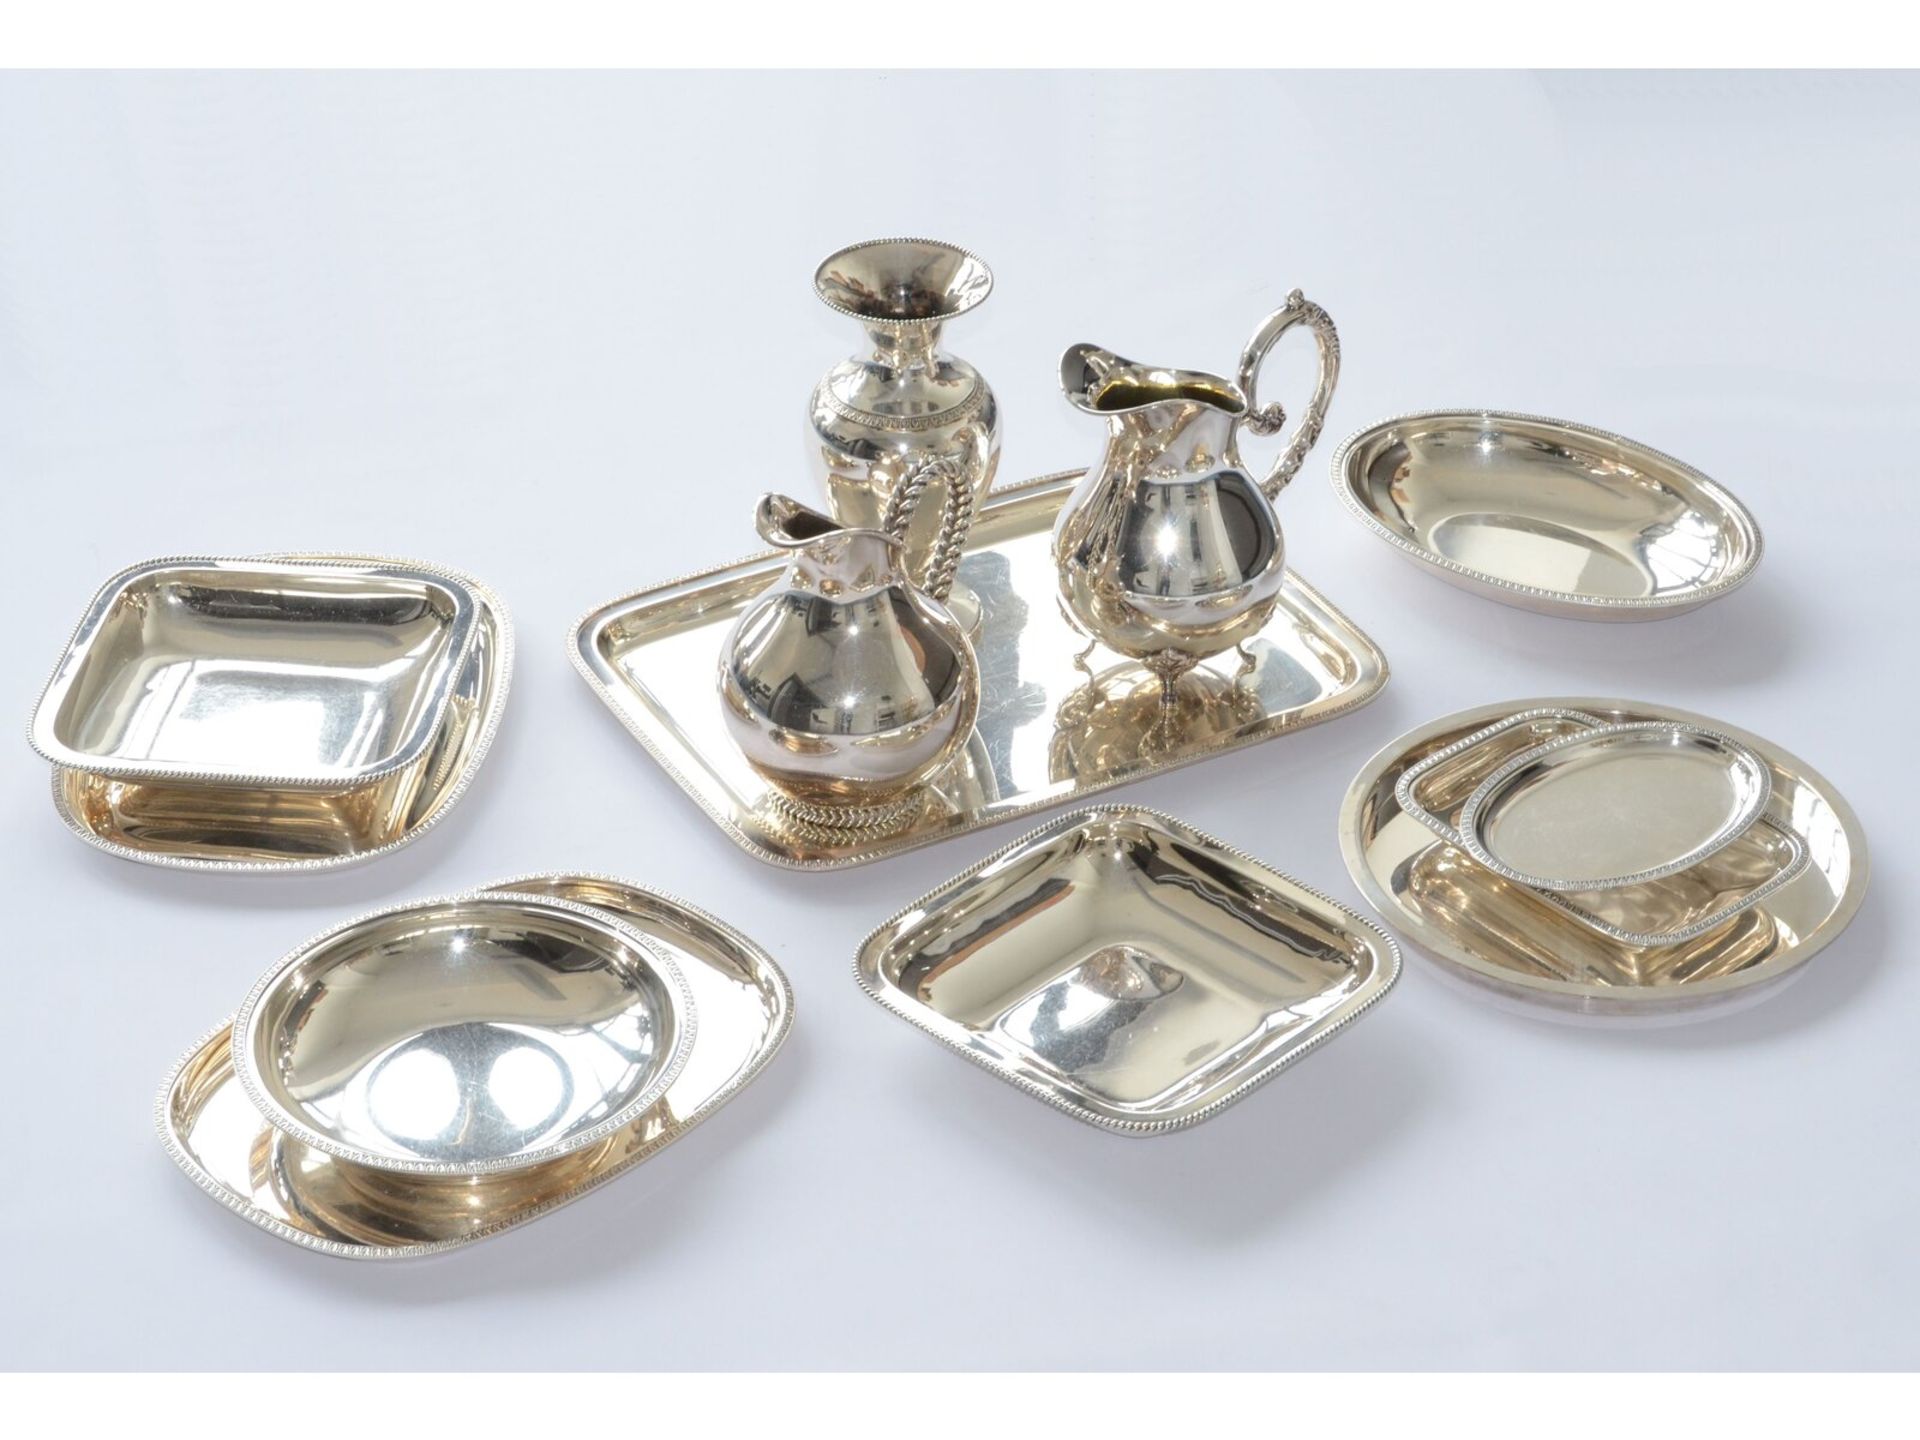 Silber: großes Sterlingsilber Konvolut aus Kannen, Schalen, Tabletts und 1 Vase, insges. über 7kg, 1